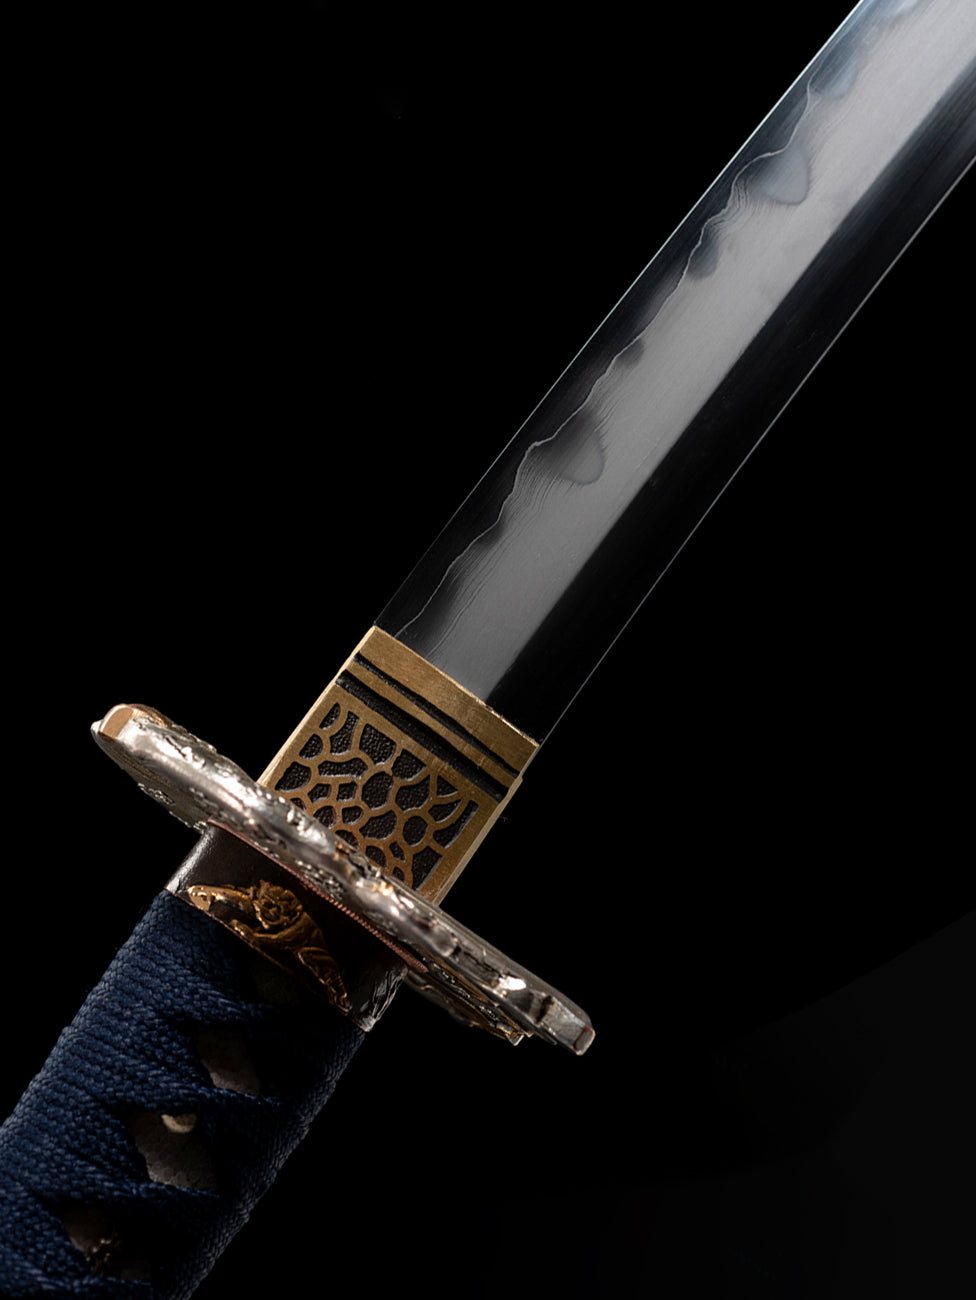 Clay Tempered clamp steel Japanese sword katana Zhong Kui